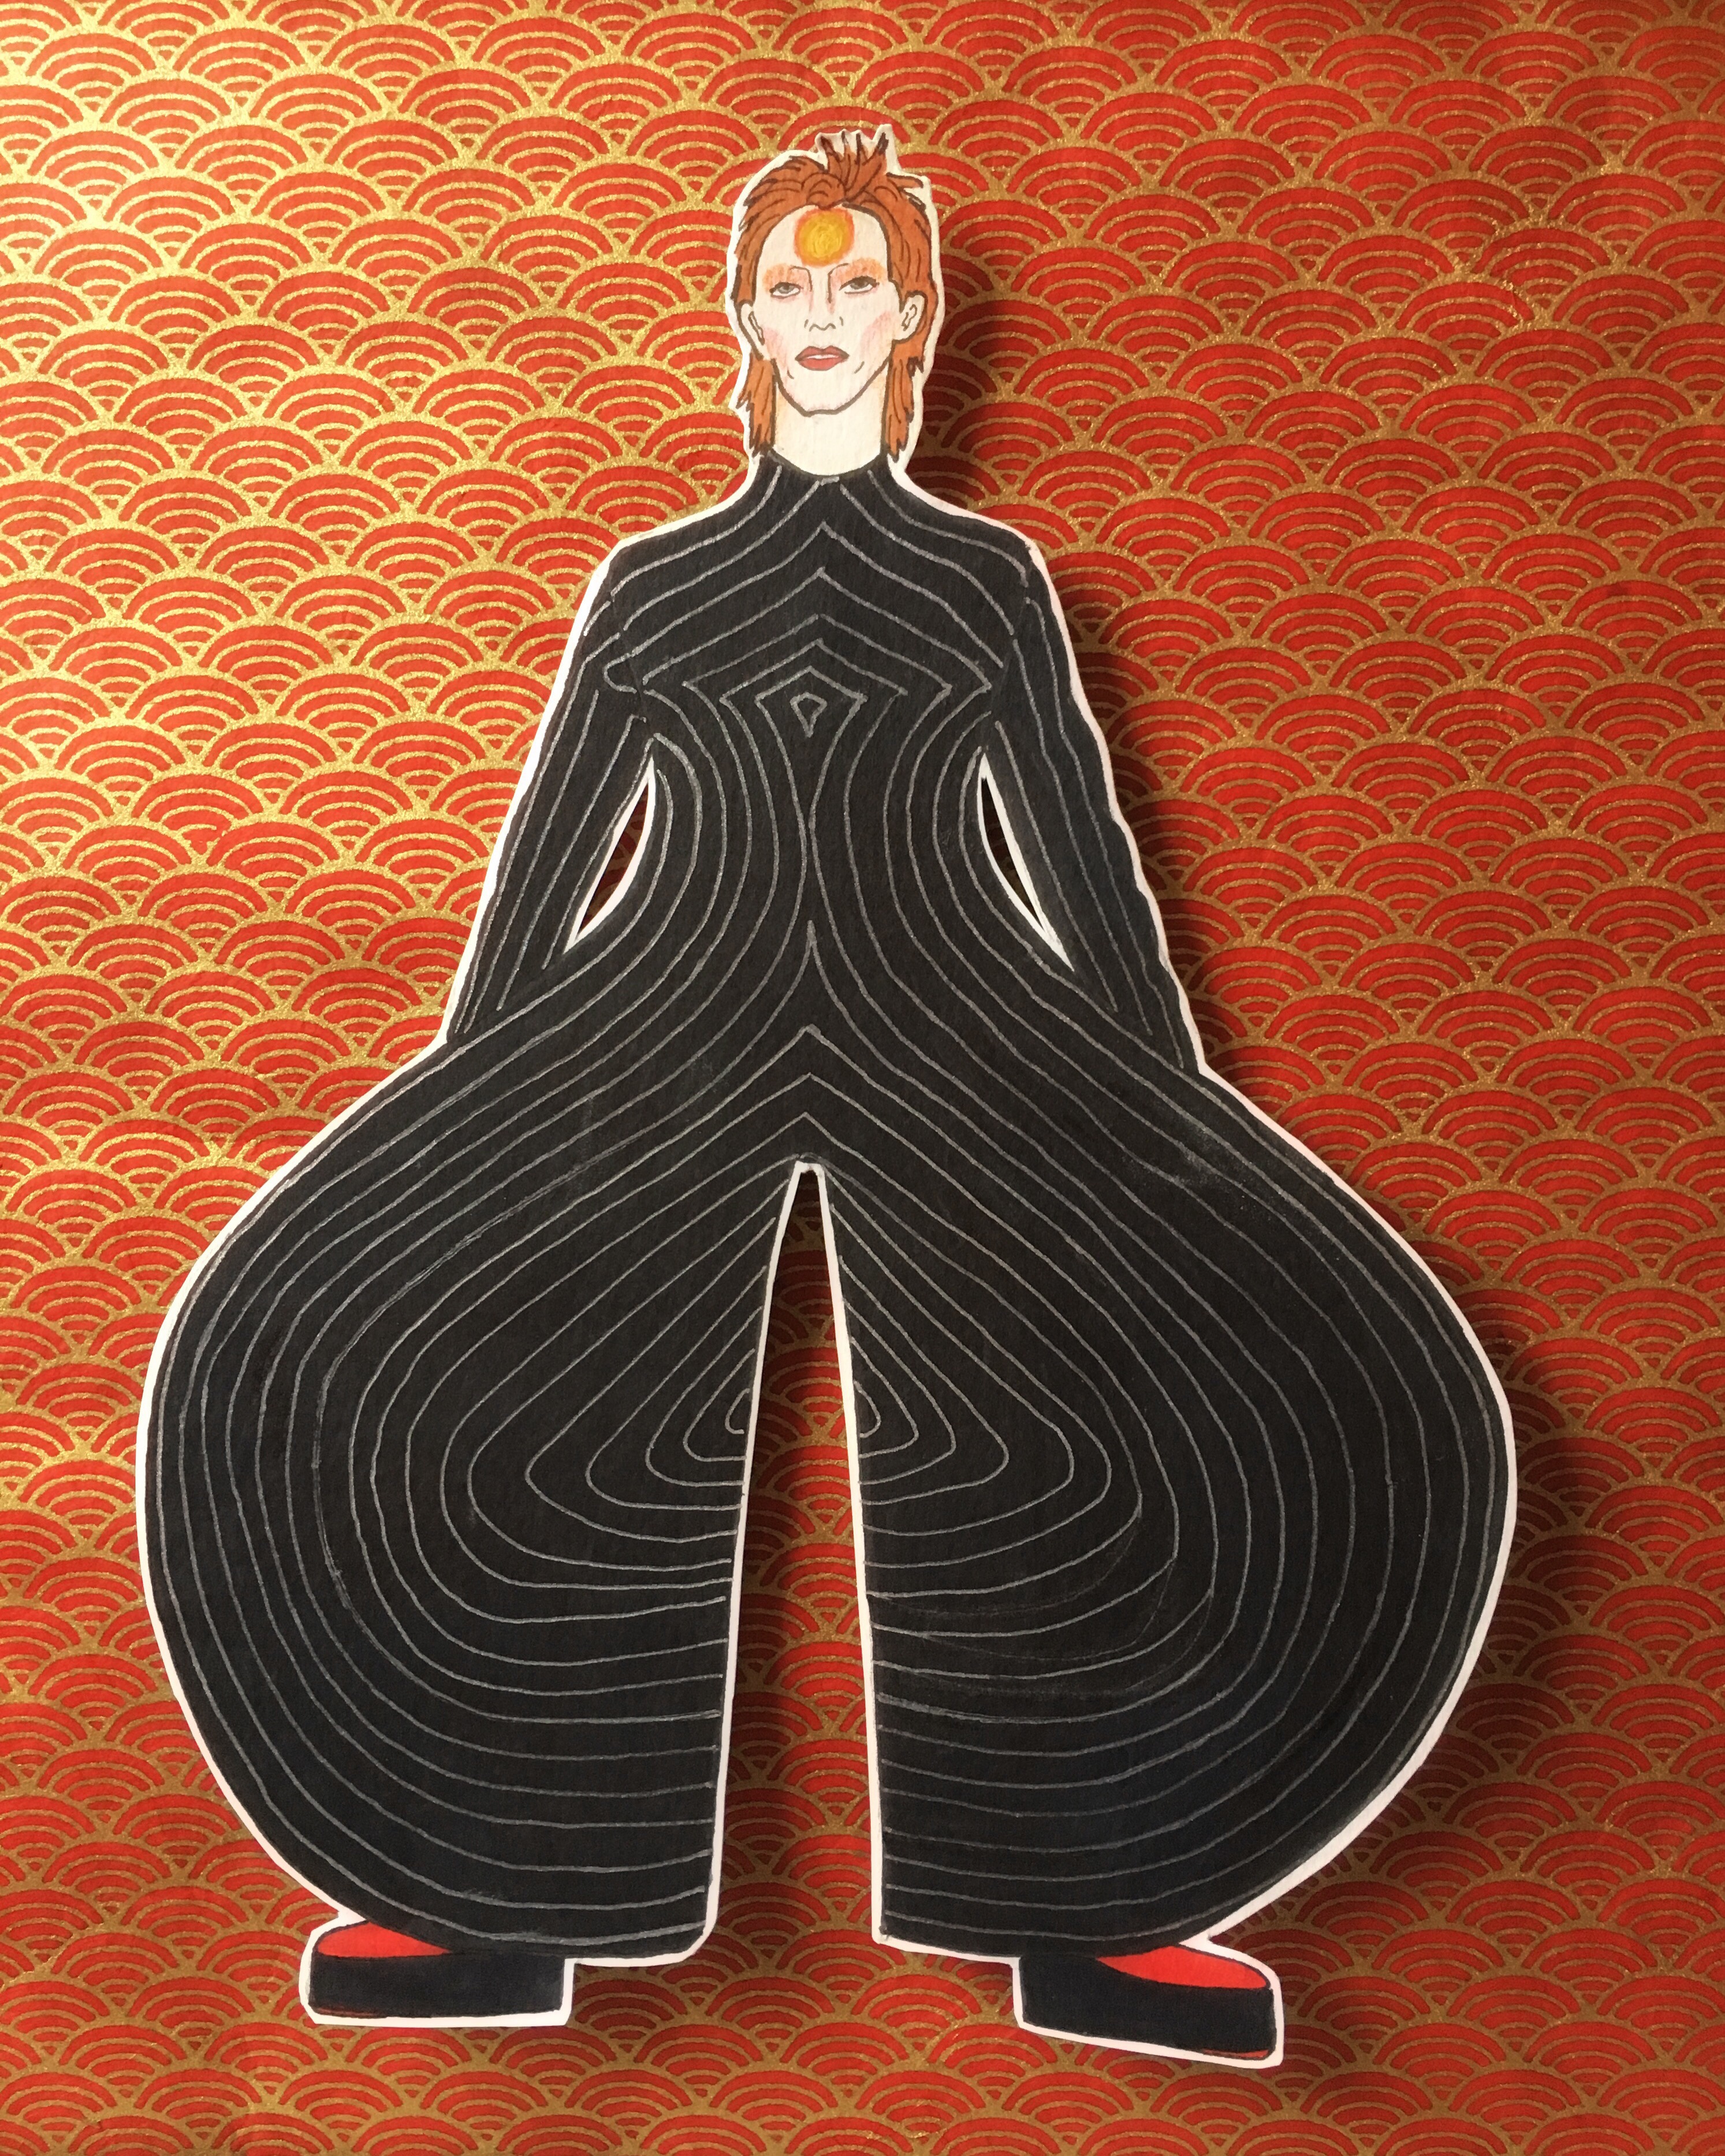 More Bowie love – Kansai Yamamoto suit